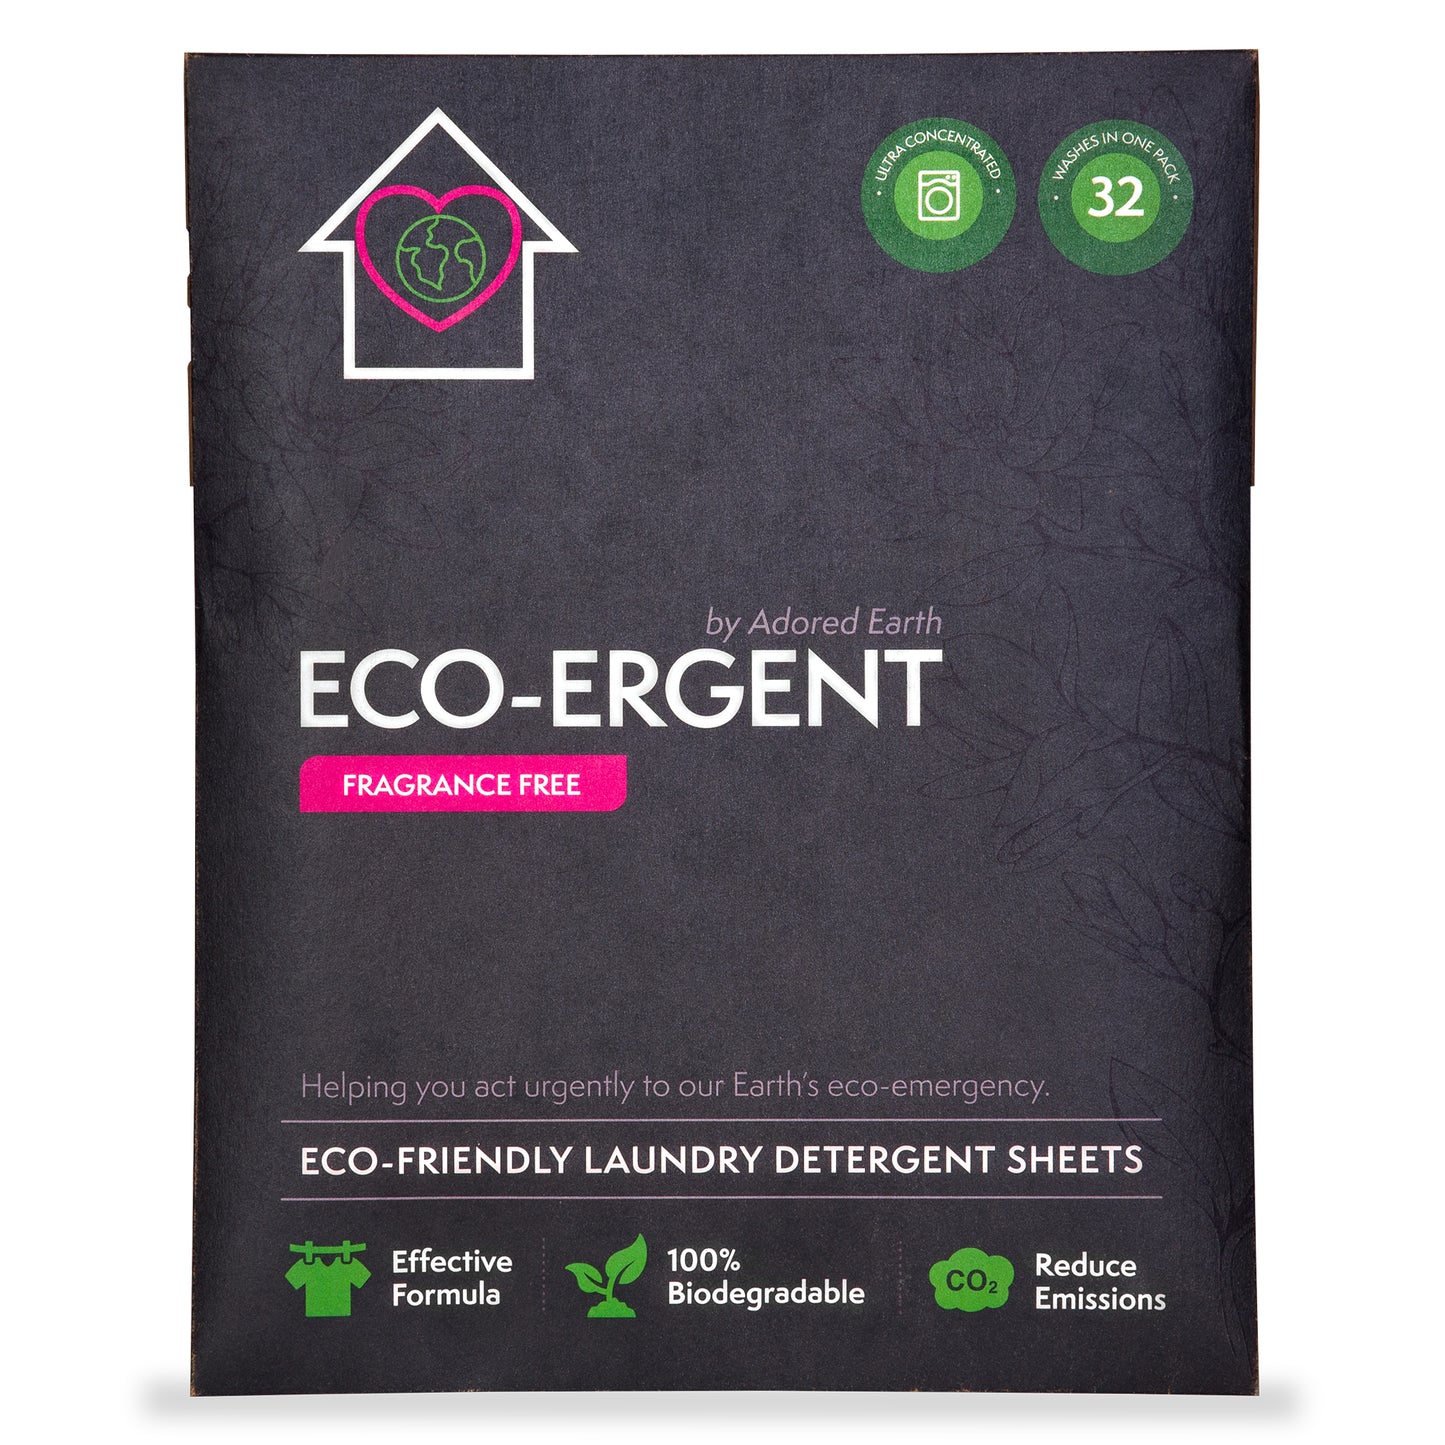 Eco-Ergent Laundry Detergent Sheets